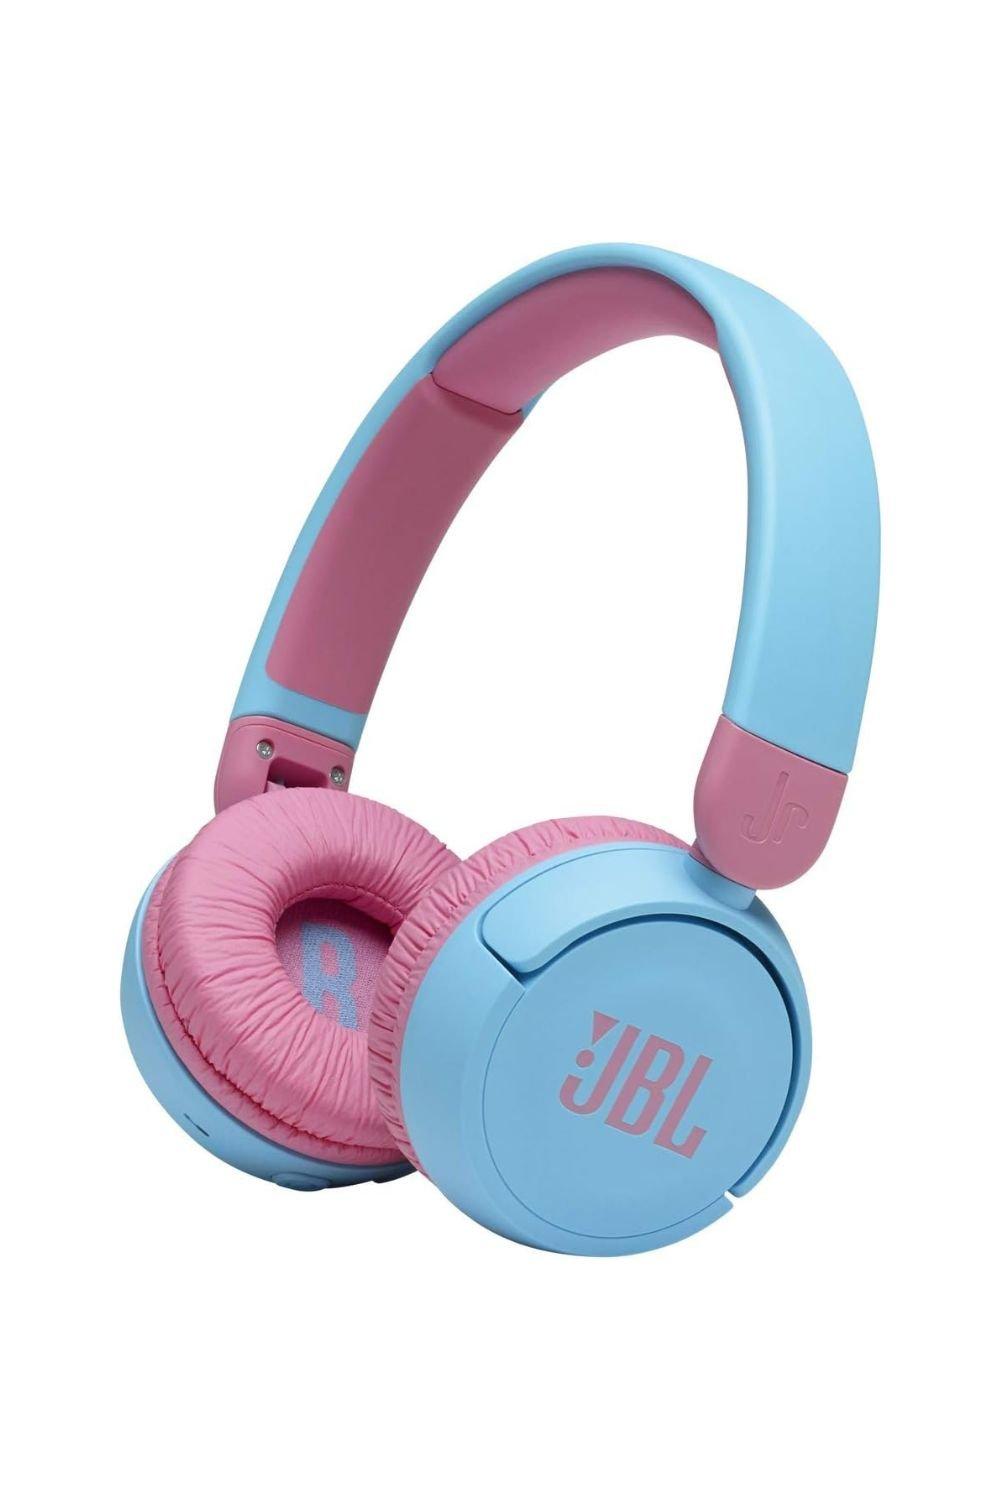 JBL JR310 On-Ear Headphones - Blue